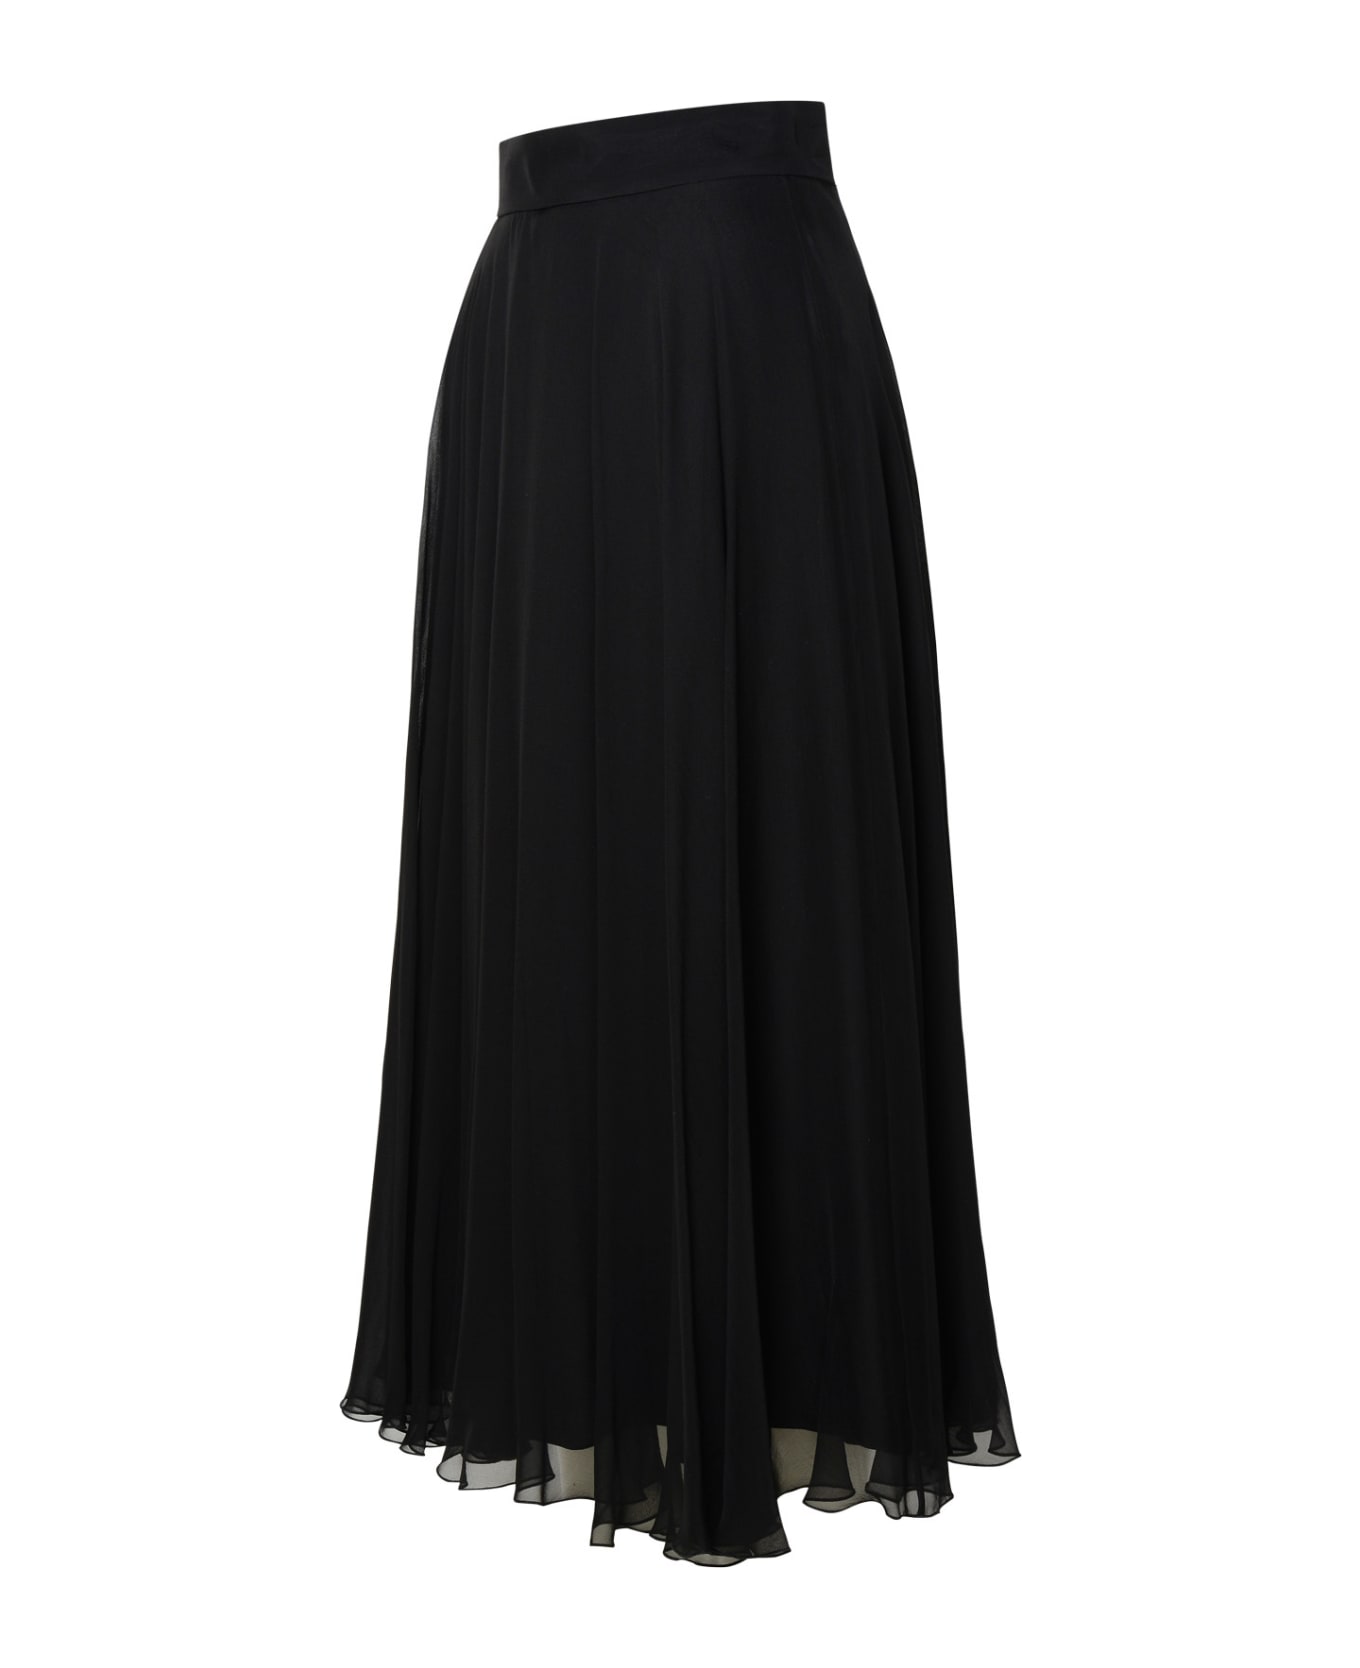 Dolce & Gabbana Chiffon Skirt - NERO スカート